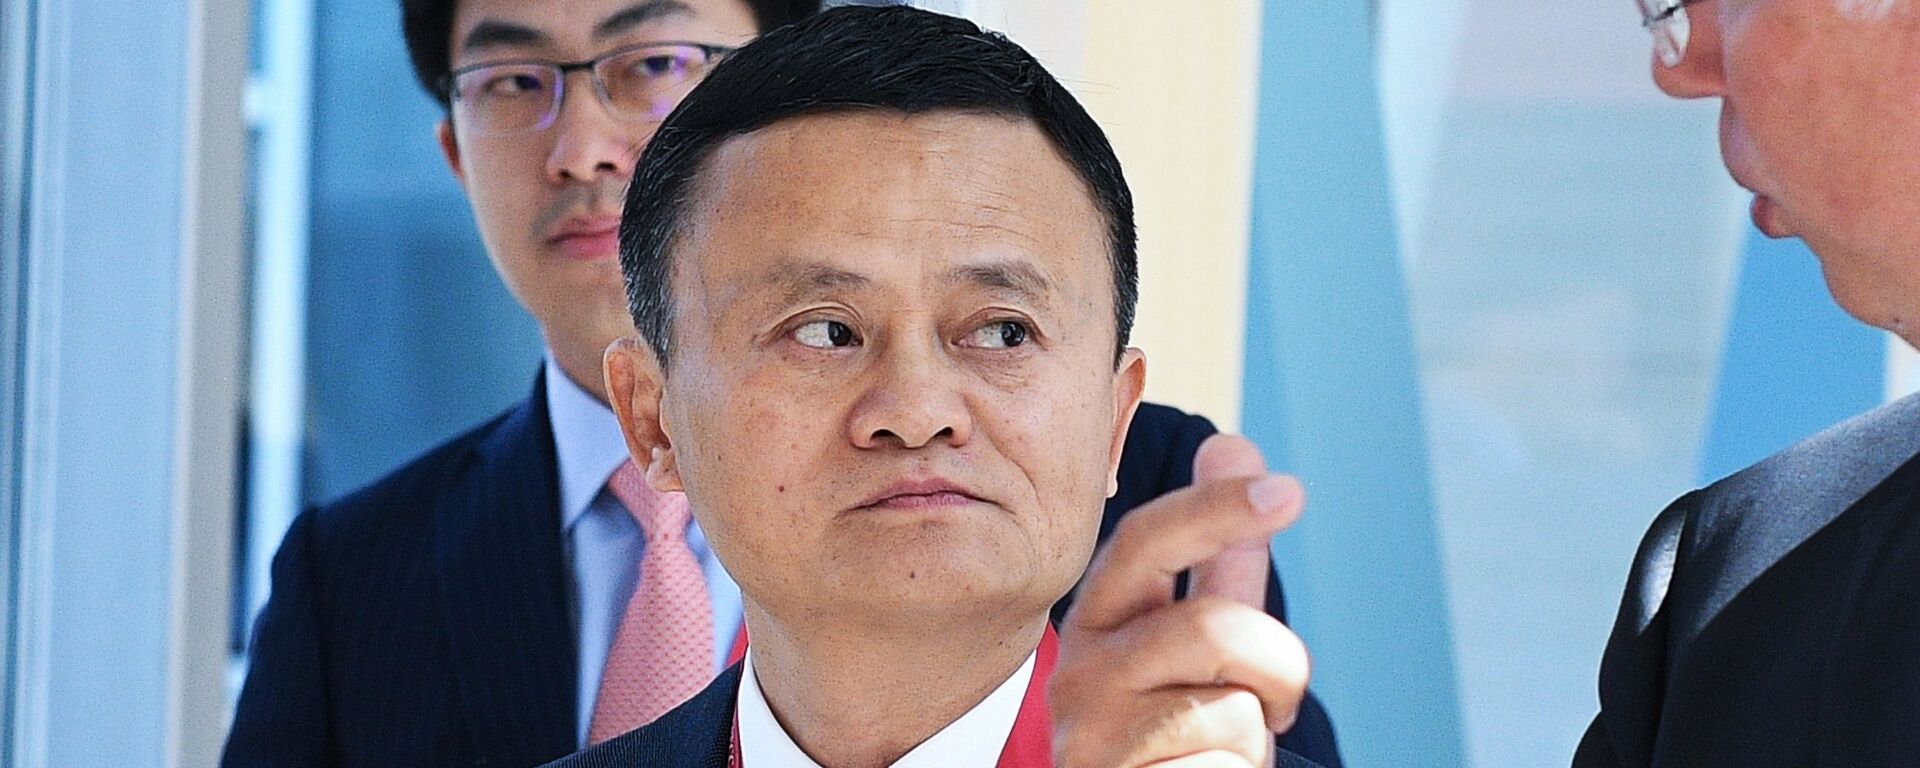 Jack Ma, fundador de Alibaba - Sputnik Mundo, 1920, 25.12.2020